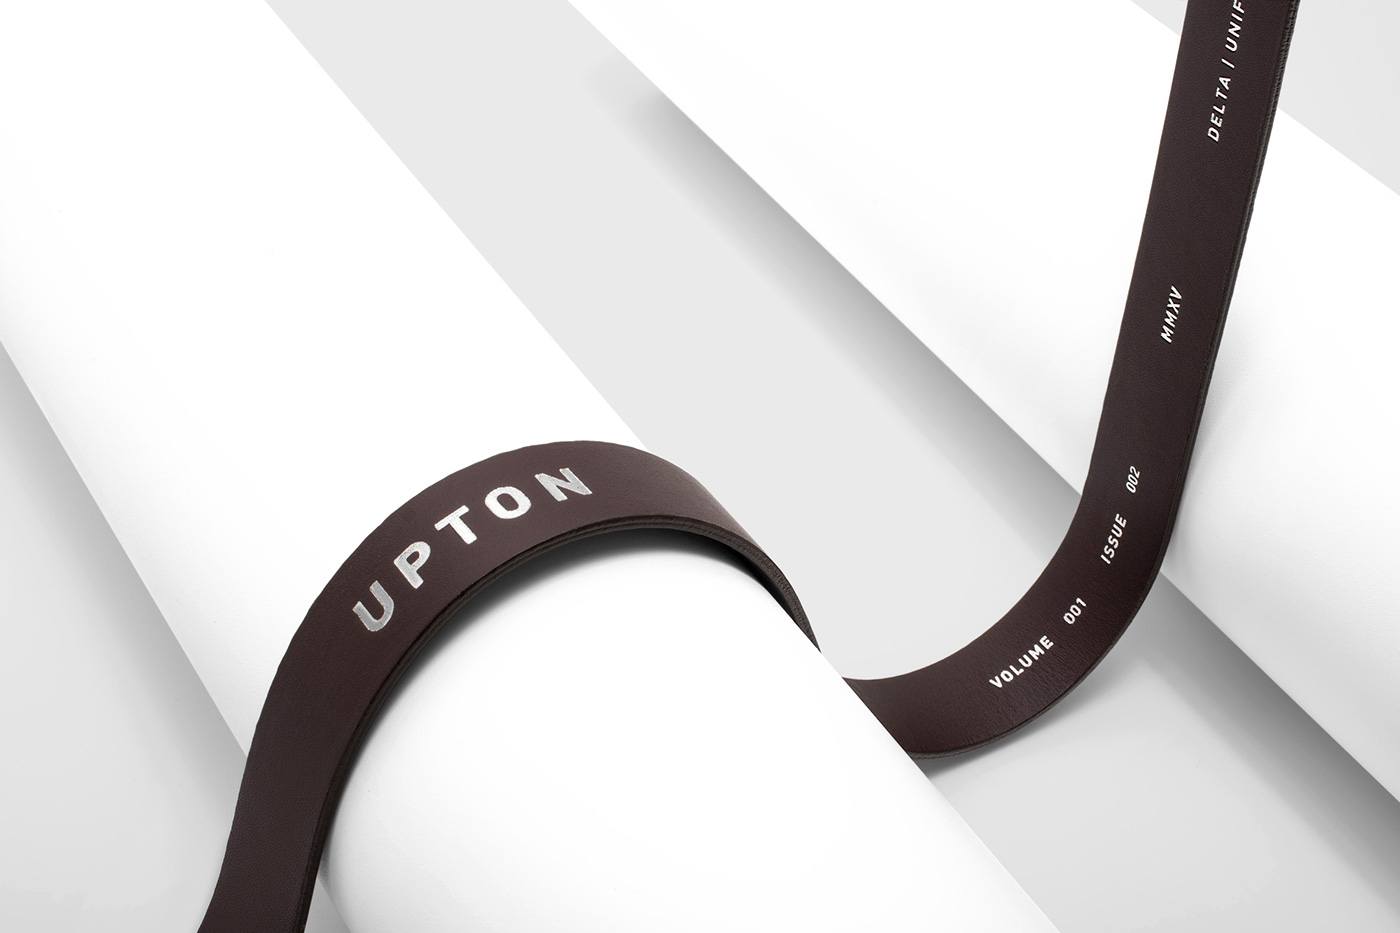 Upton Upton Belts Wedge and Lever leather luxury minimalist Case Study premium white on white belts minimal dripping paint skull sculpture men's fashion